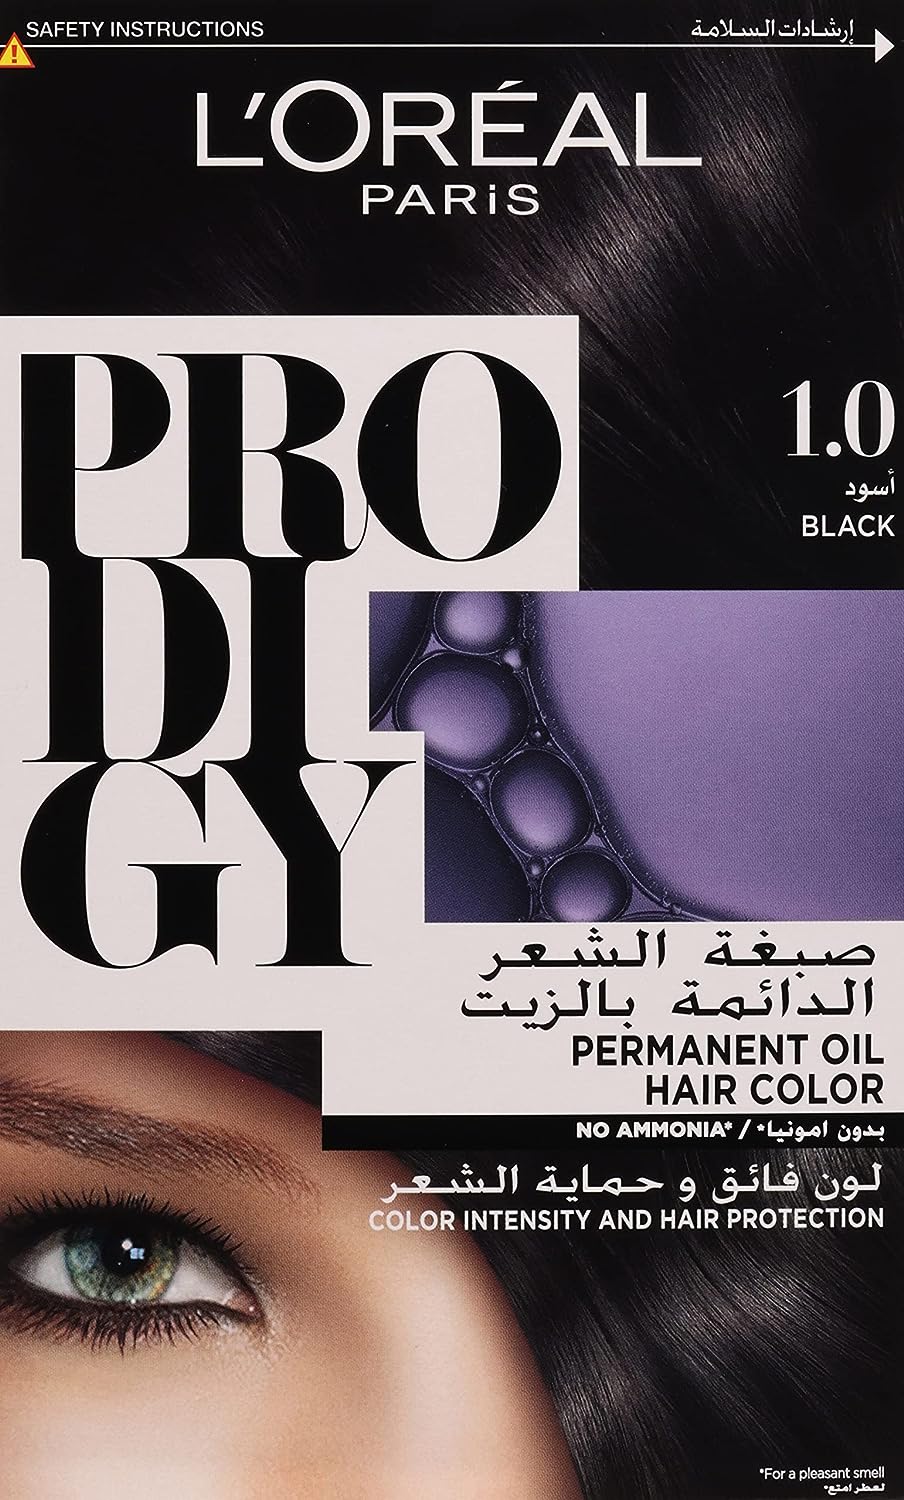 LOreal Paris Prodigy, 1.0 Black